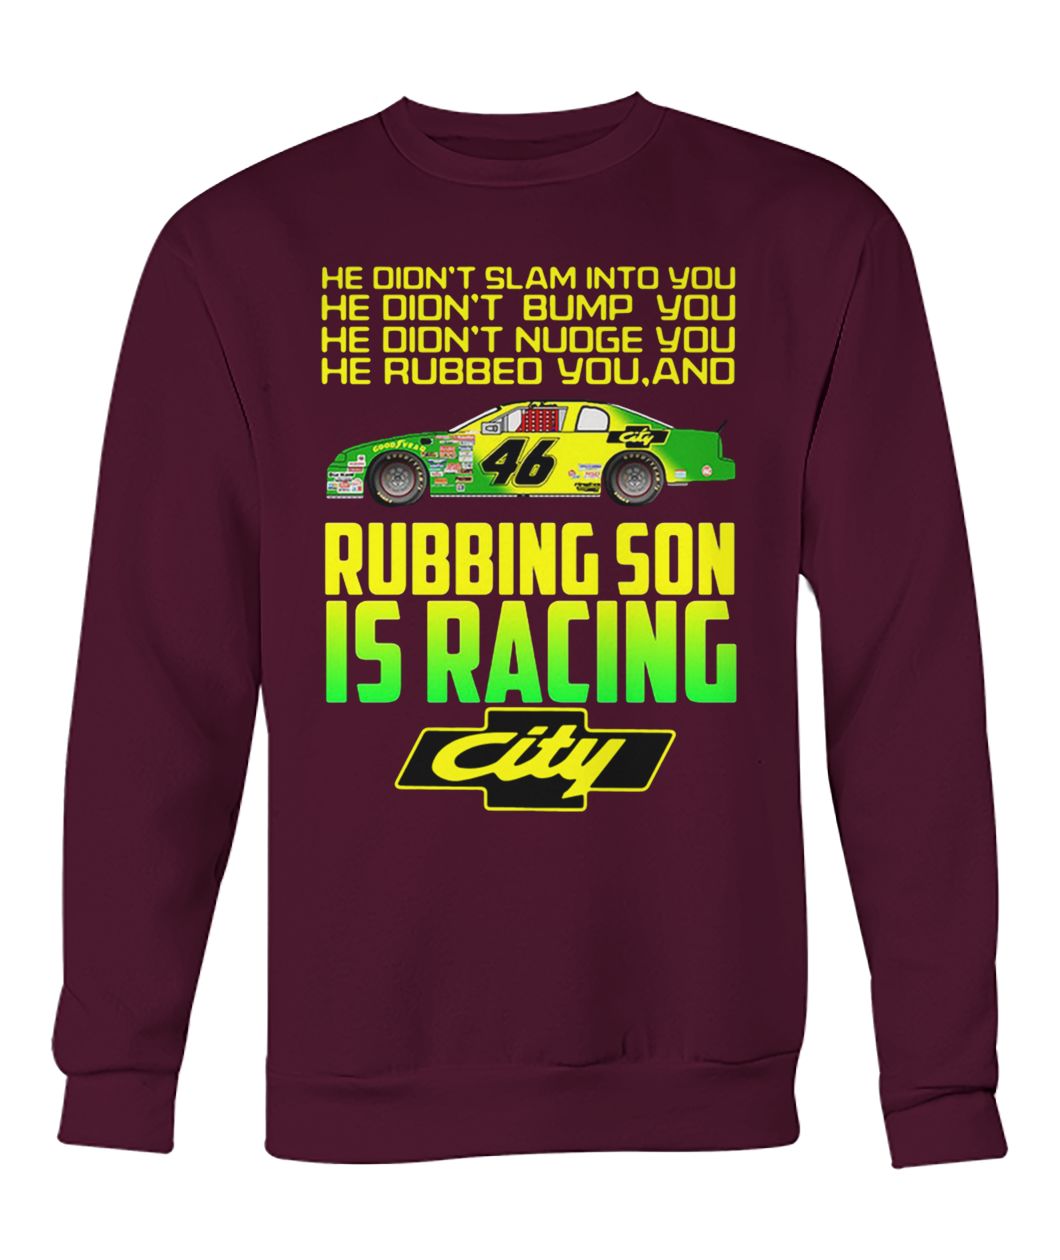 Rubbing son is racing city he didn't slam into you he didn't bump you crew neck sweatshirt